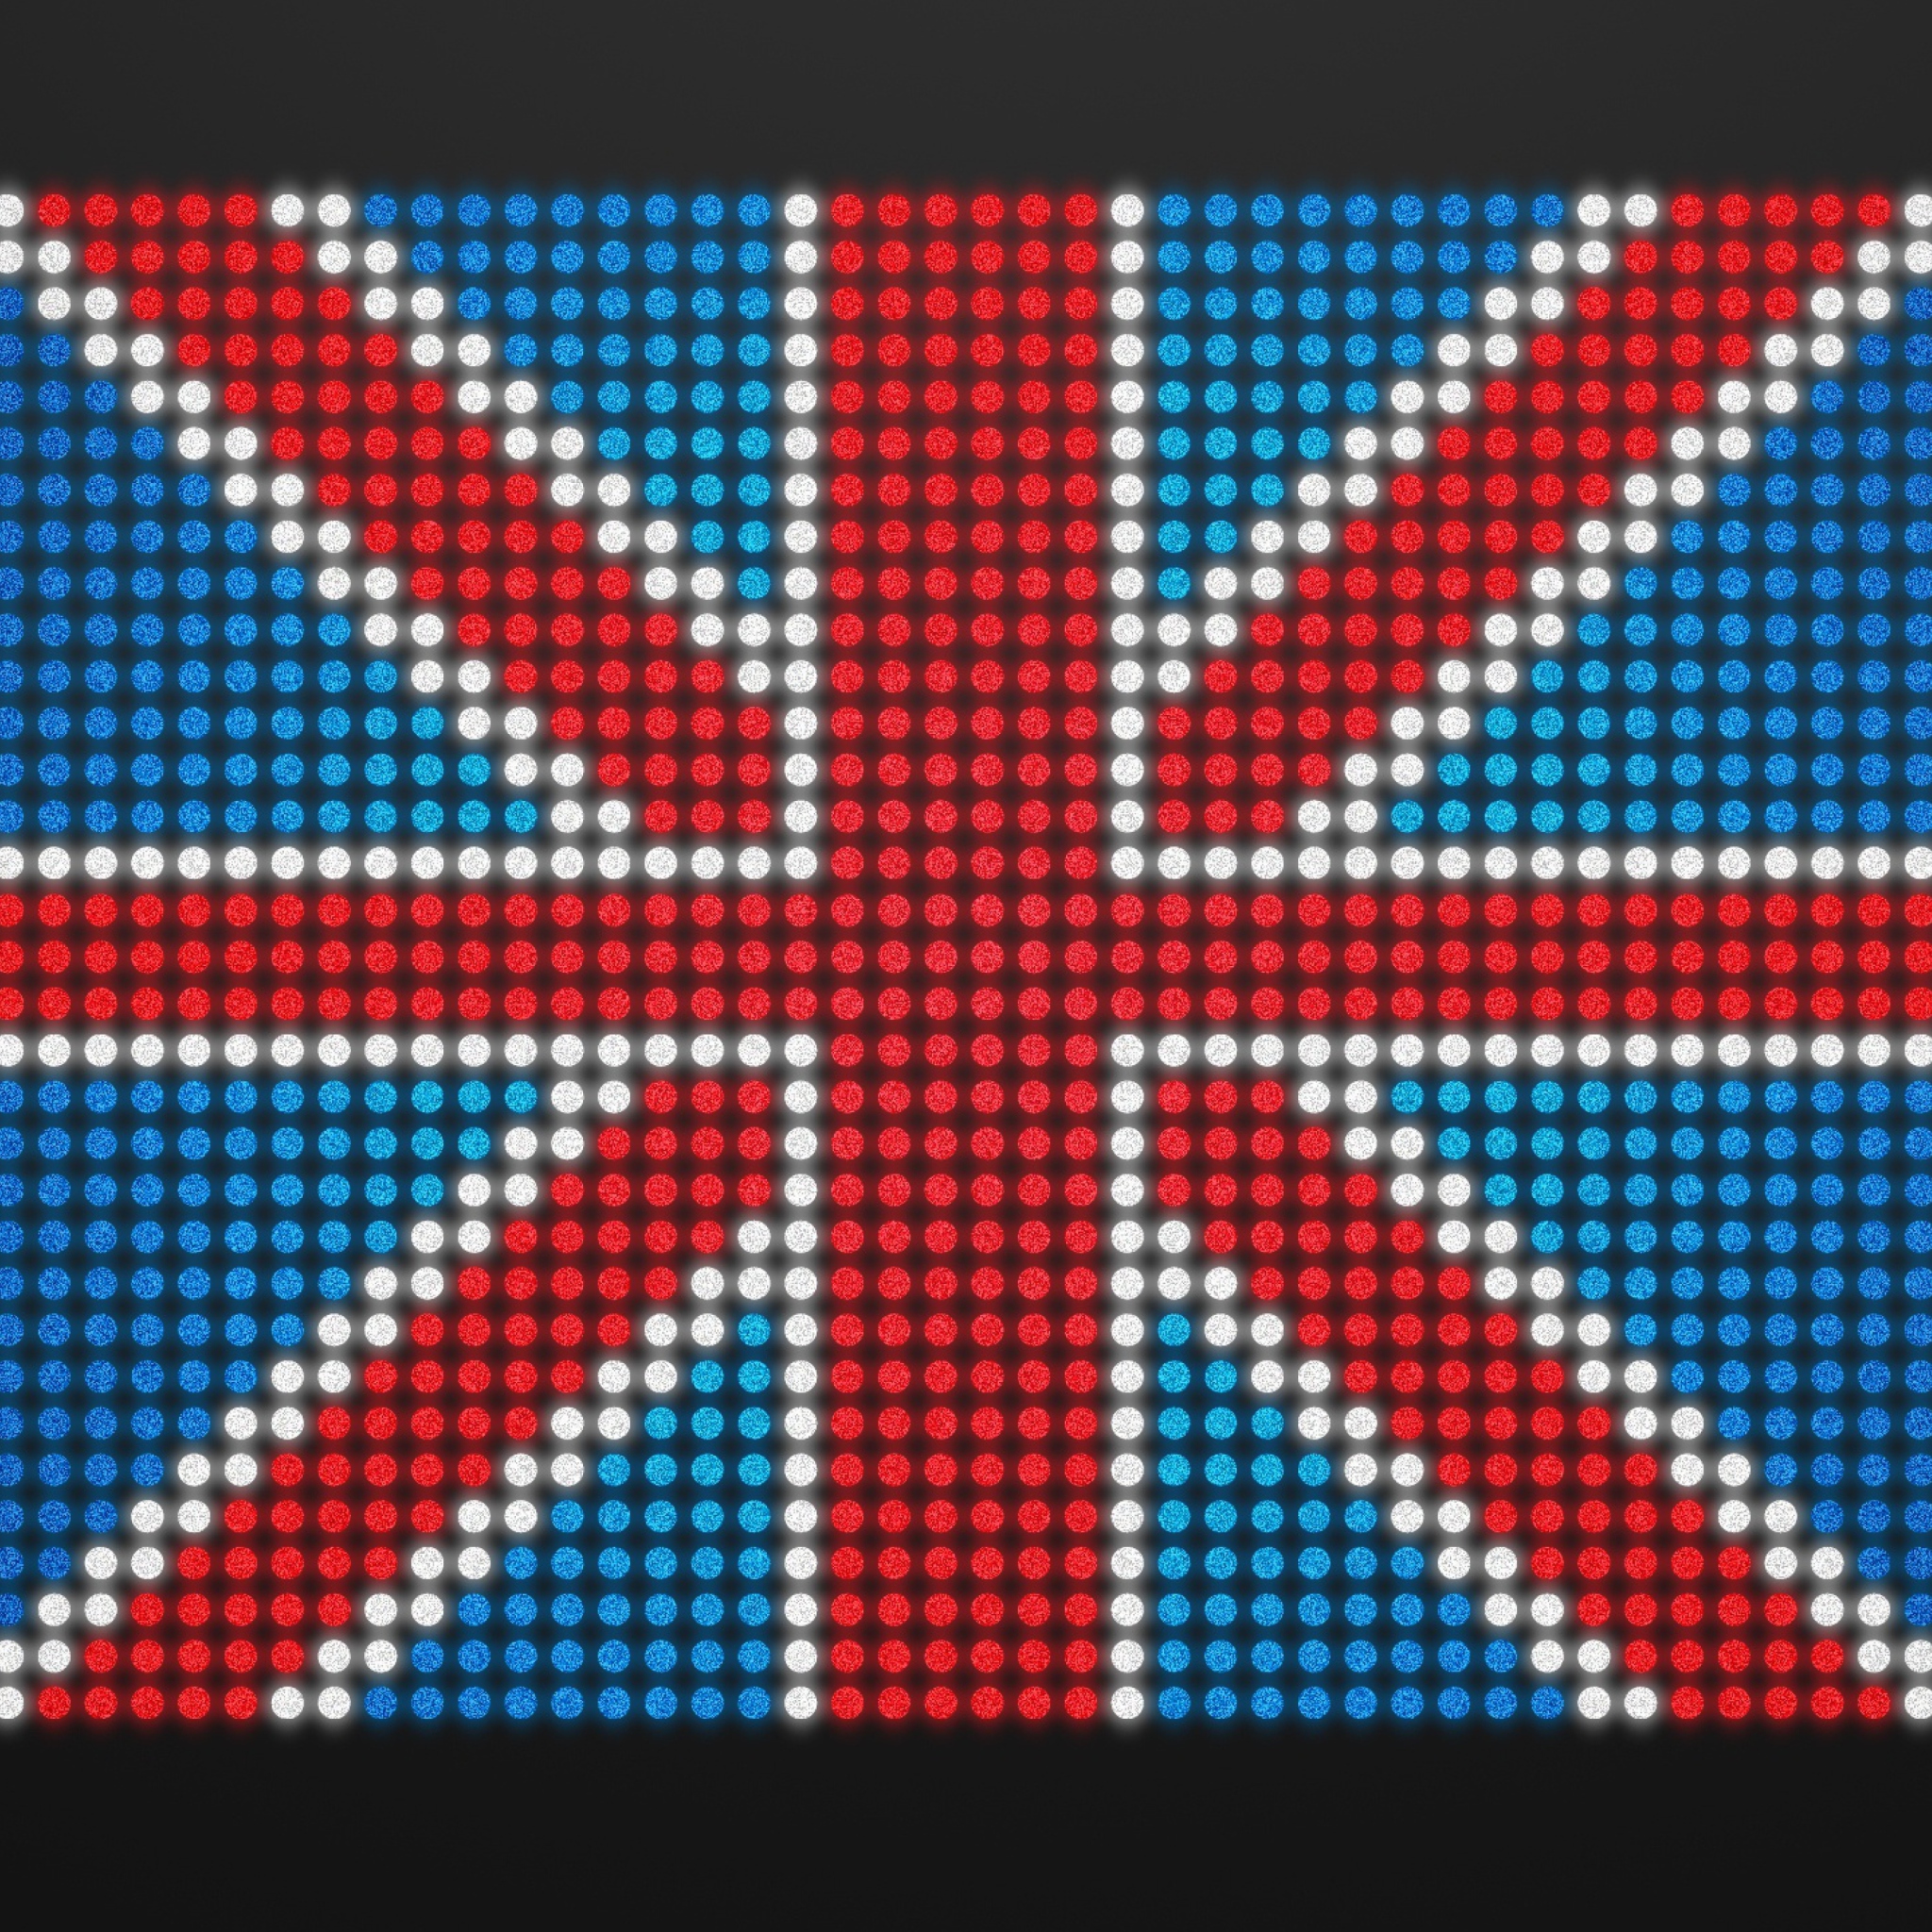 Das British Flag Wallpaper 2048x2048